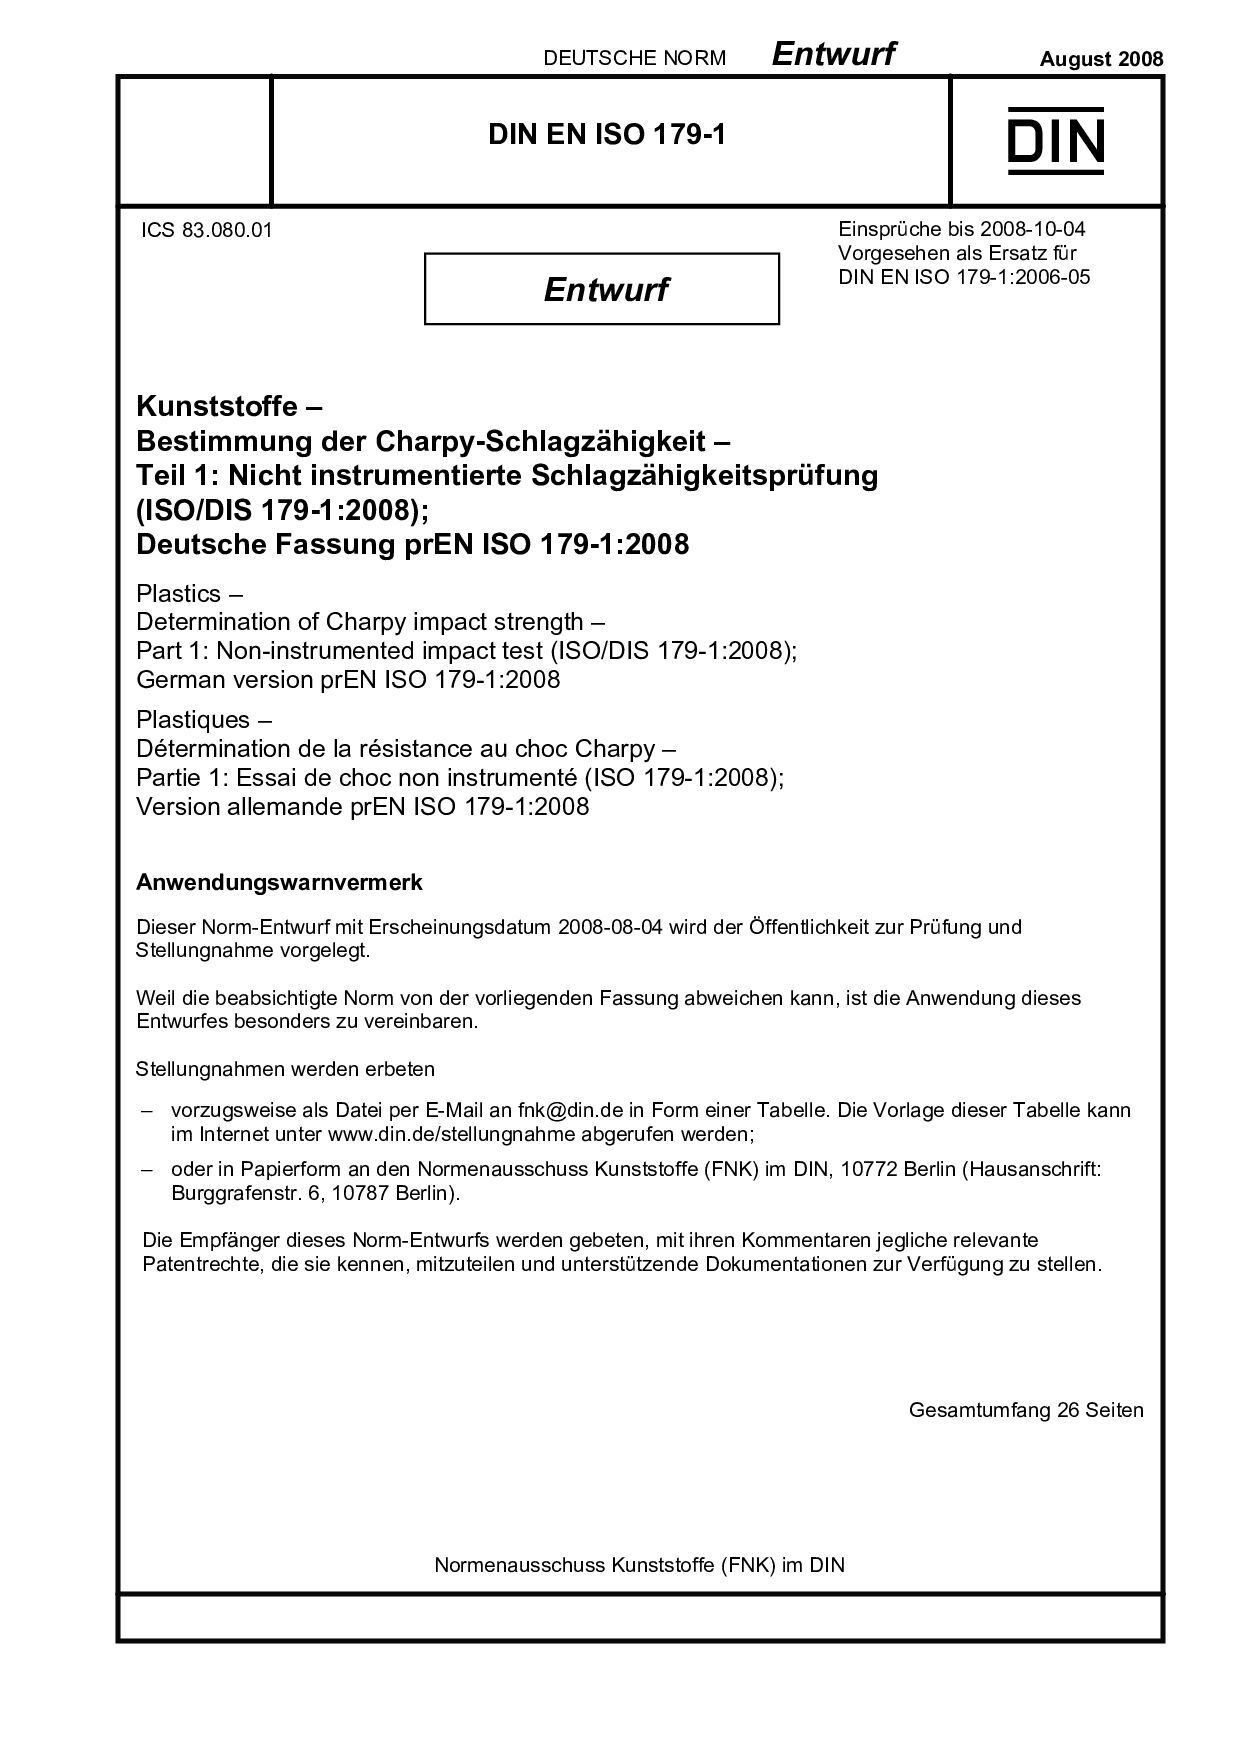 DIN EN ISO 179-1 E:2008-08